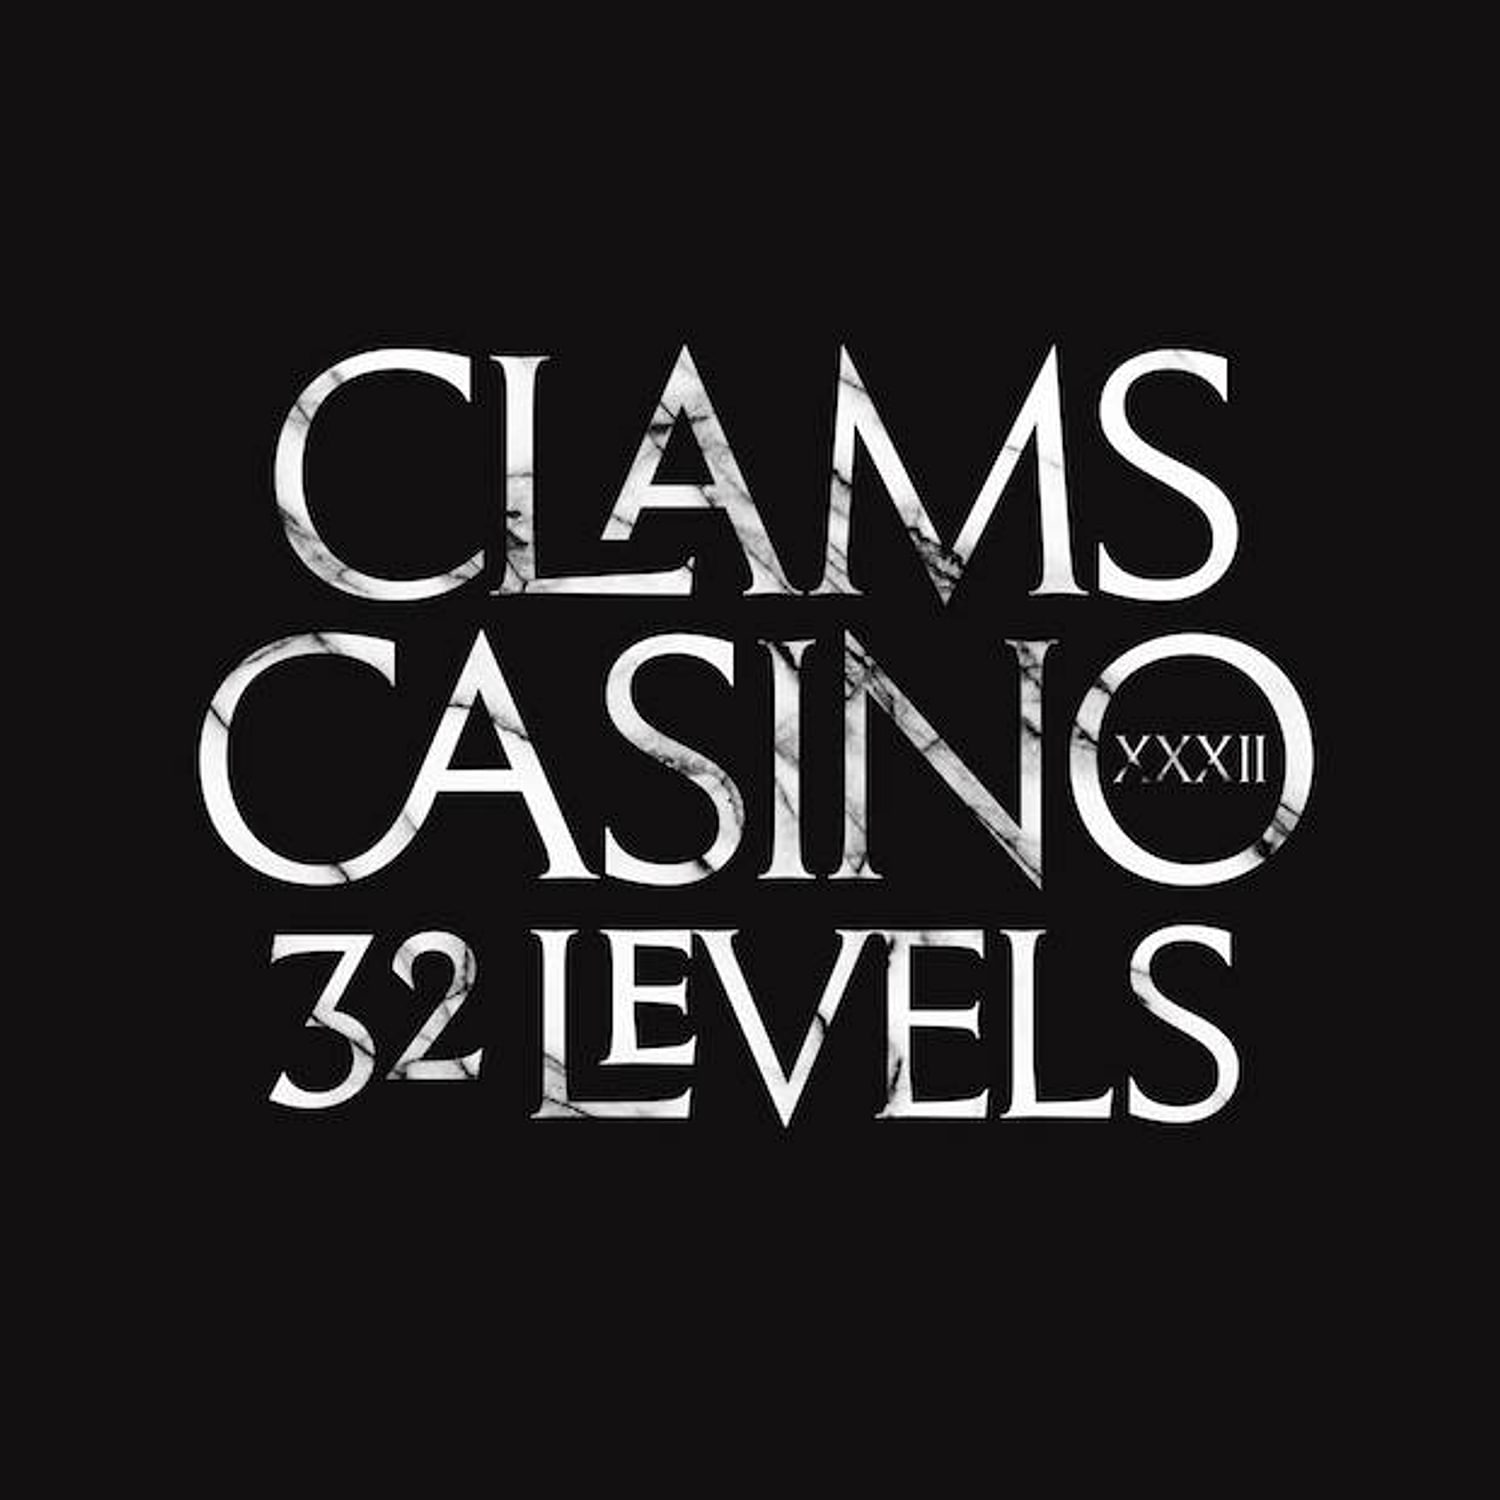 Clams Casino - 32 Levels